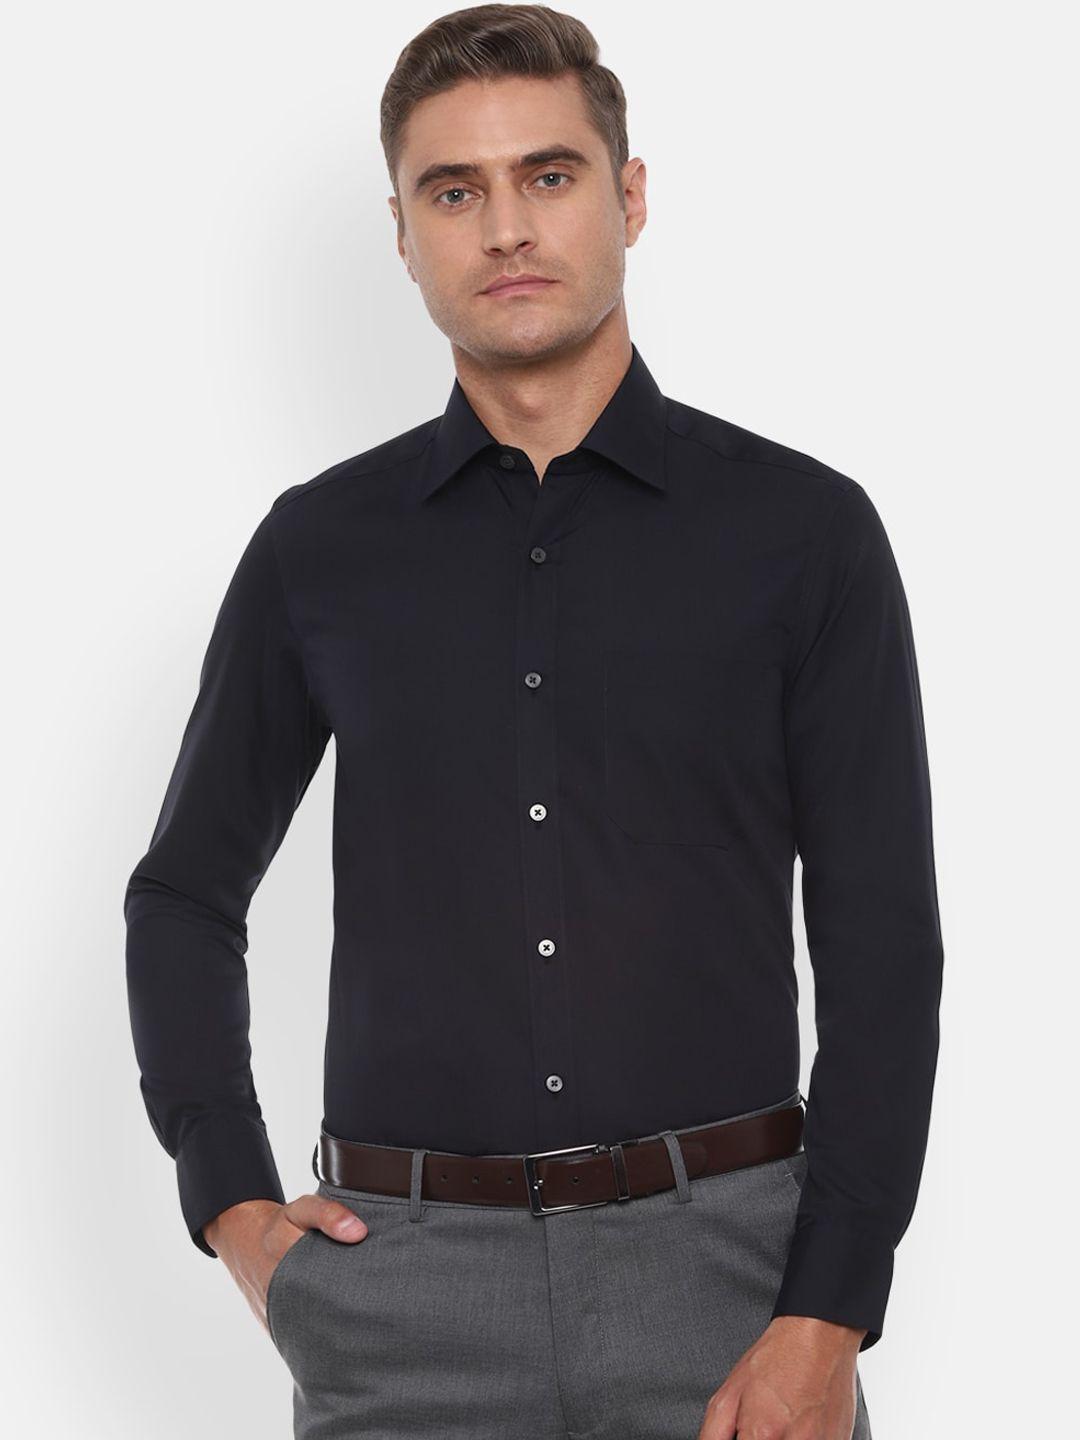 louis philippe permapress men black cotton regular fit solid formal shirt